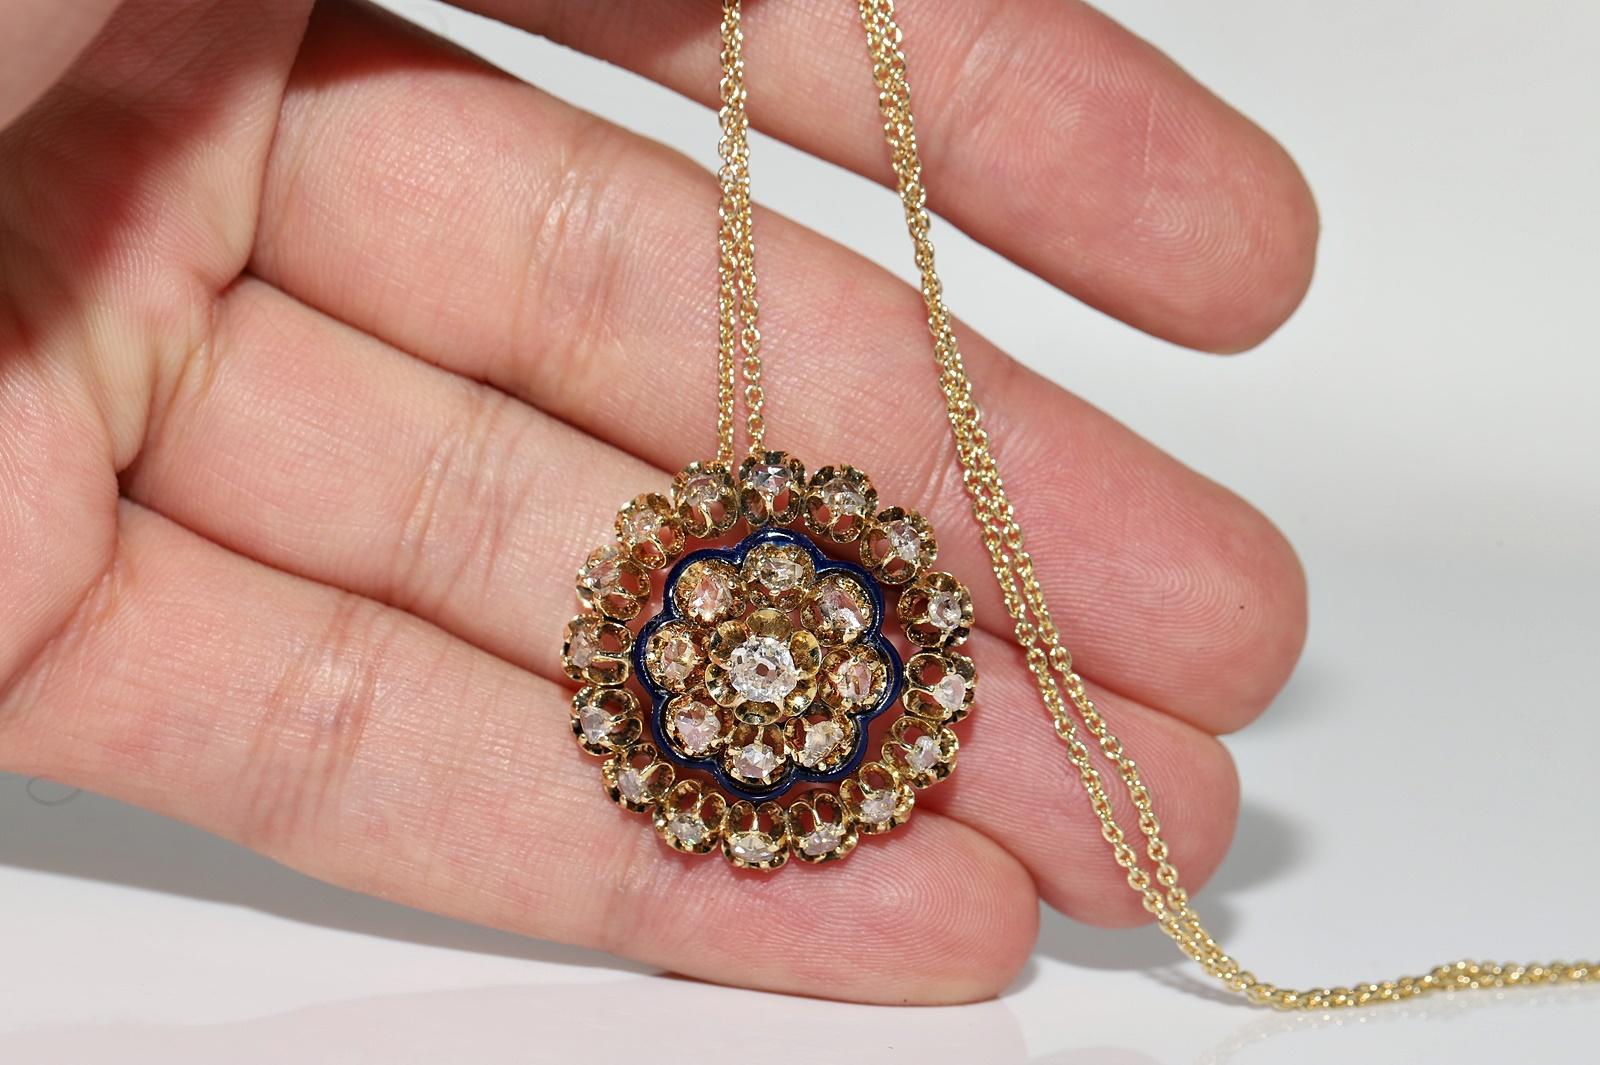 Antique Circa 1900s 18k Gold Natural Diamond And Enamel Pendant Necklace For Sale 10